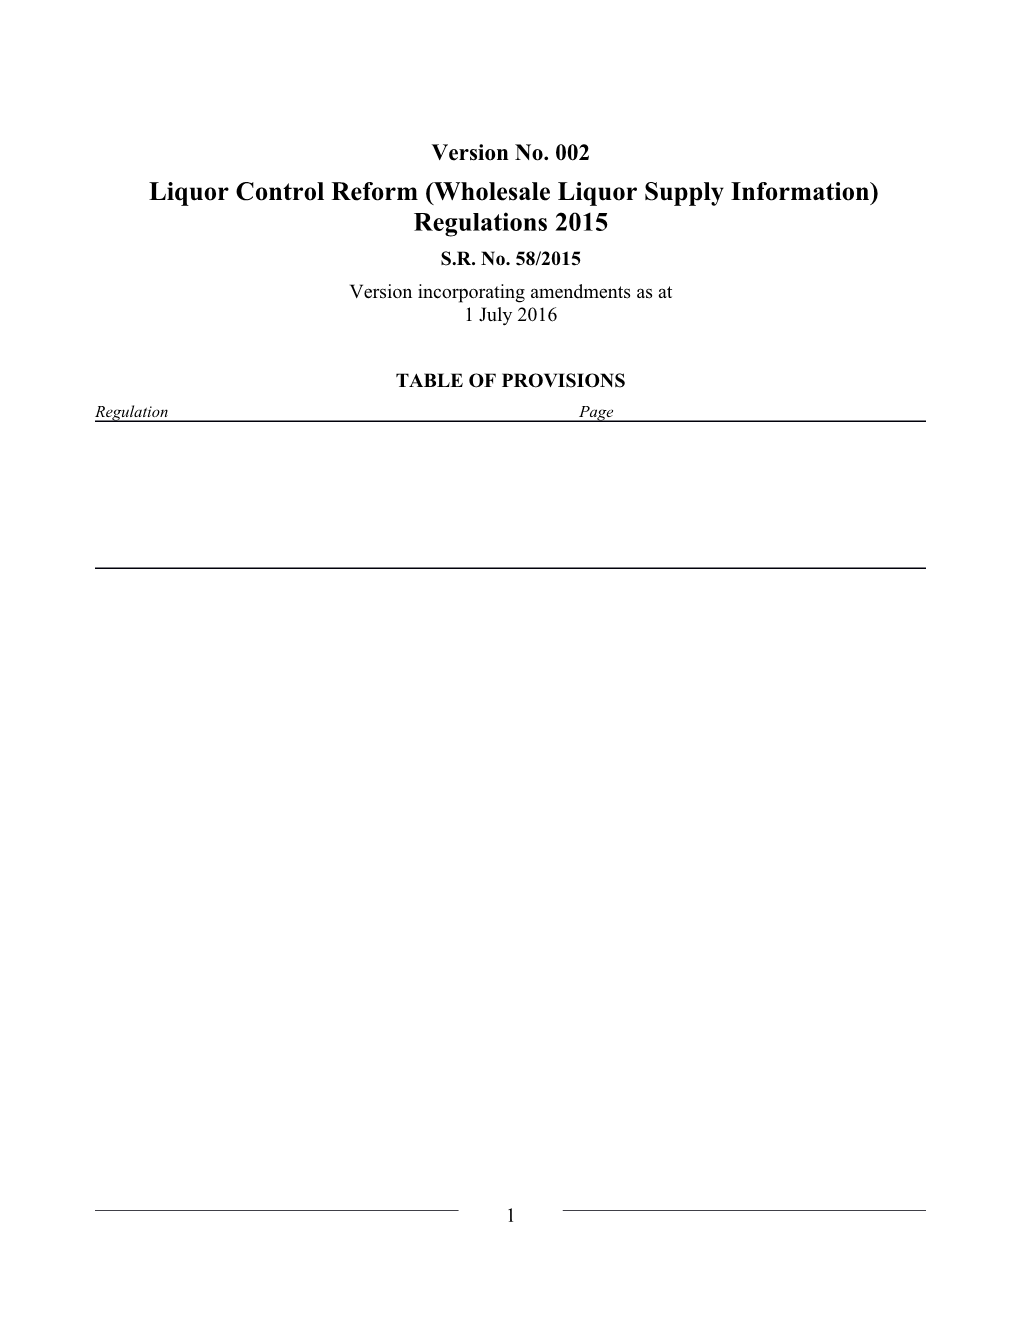 Liquor Control Reform (Wholesale Liquor Supply Information) Regulations 2015